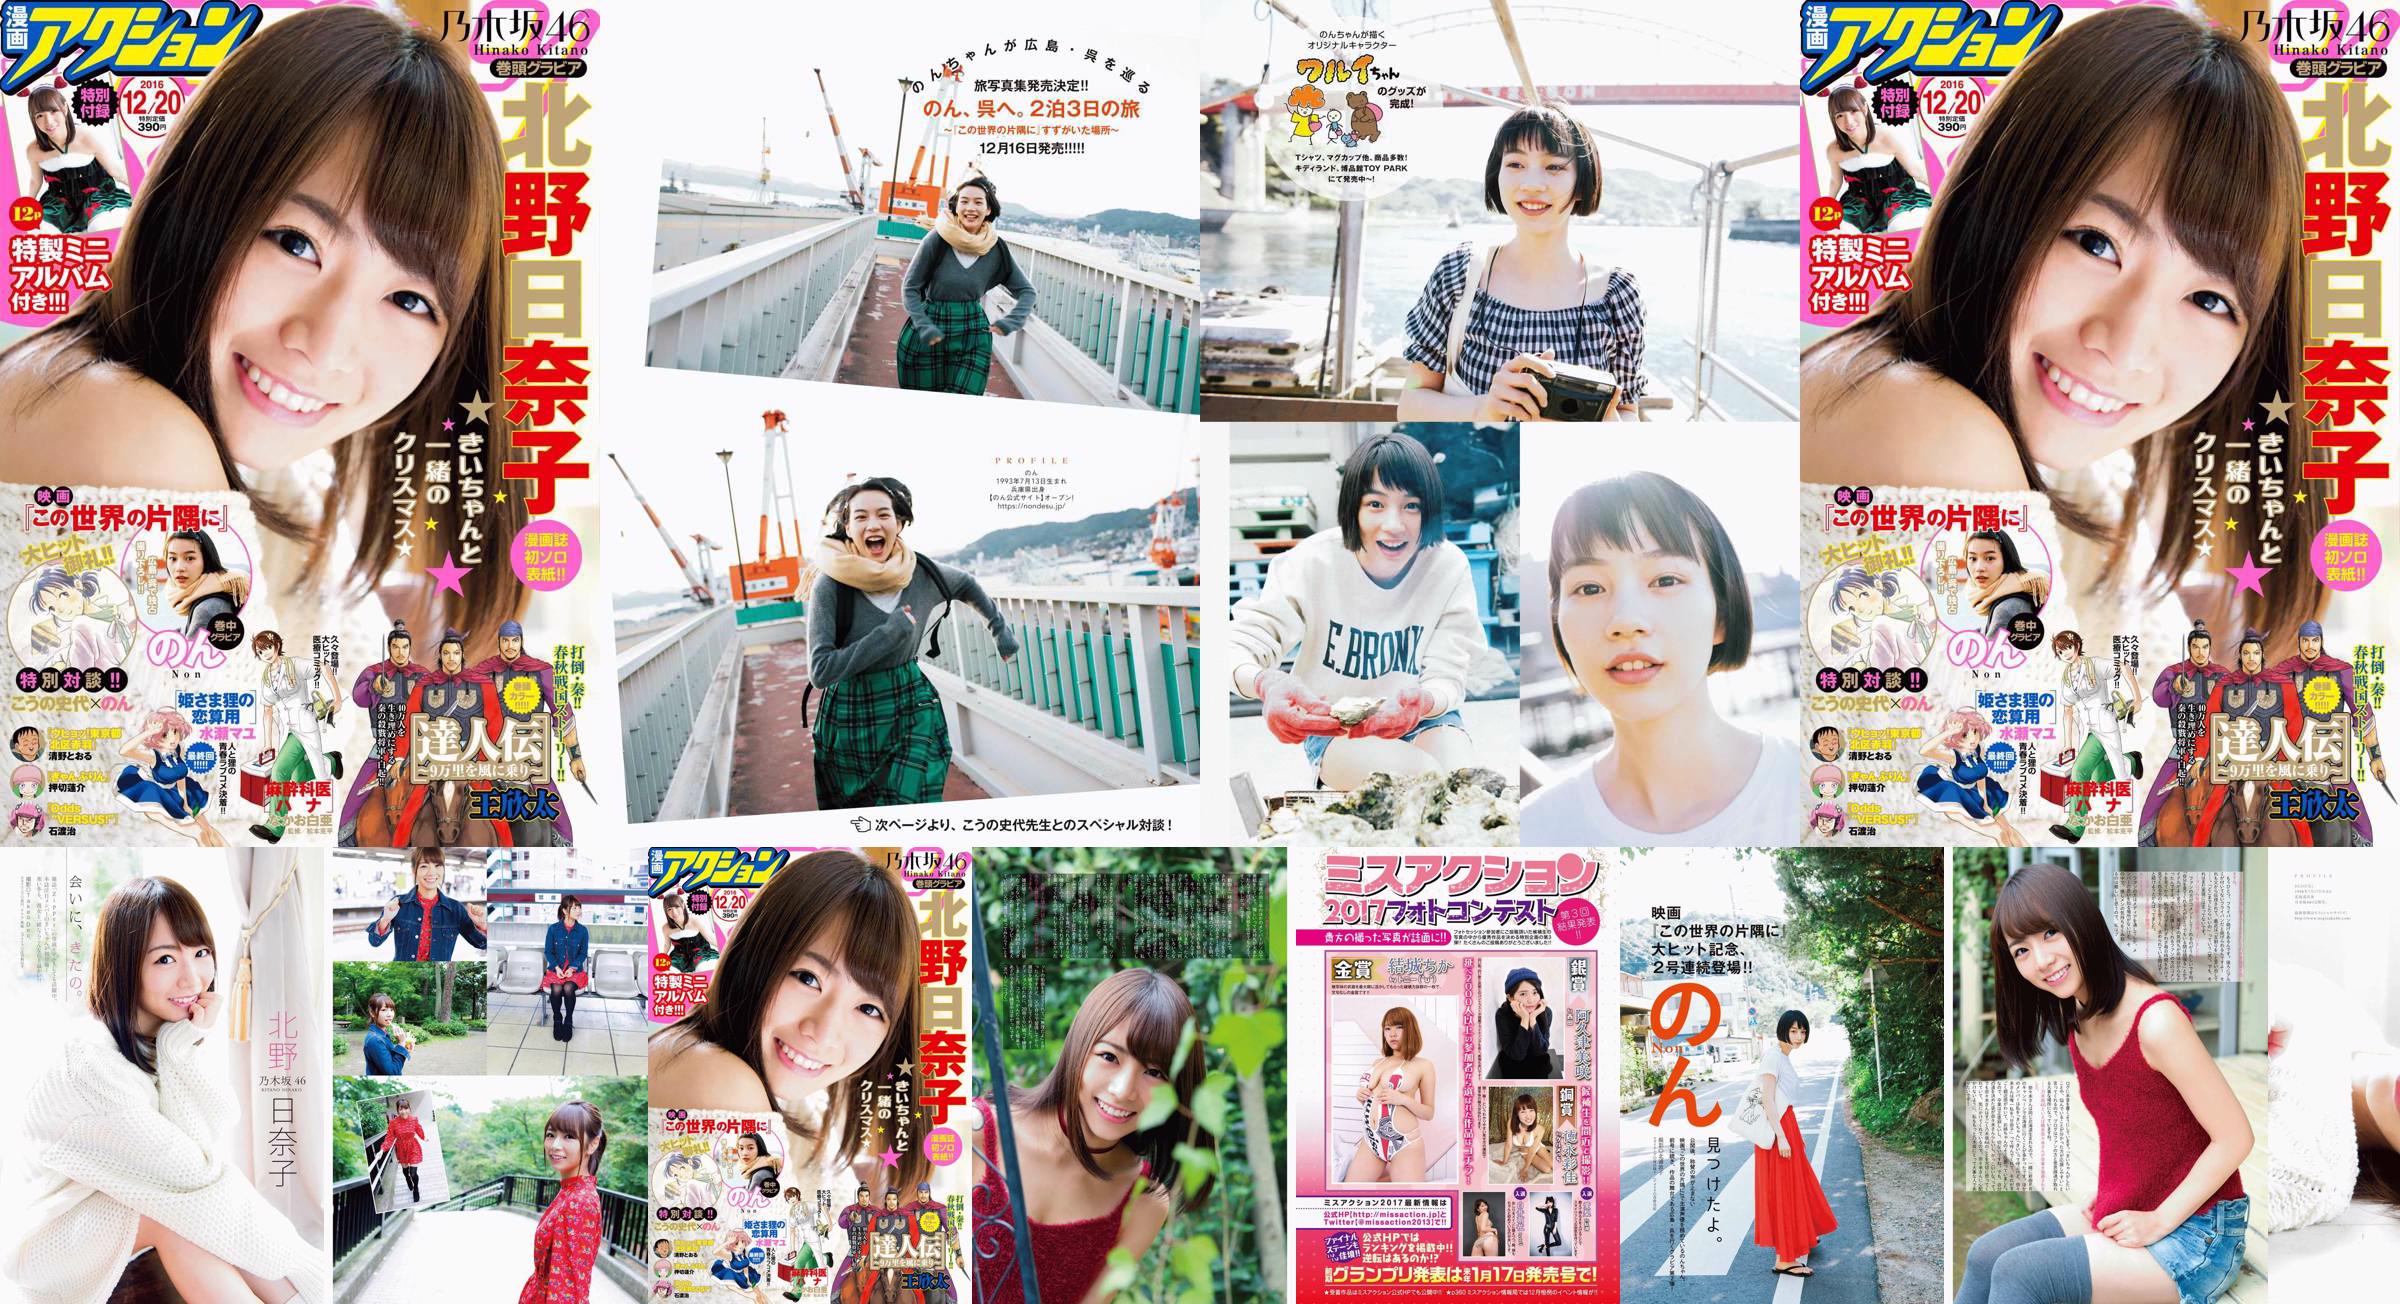 [Manga Action] Kitano Hinako のん 2016 No.24 Photo Magazine No.1ed57d Page 1